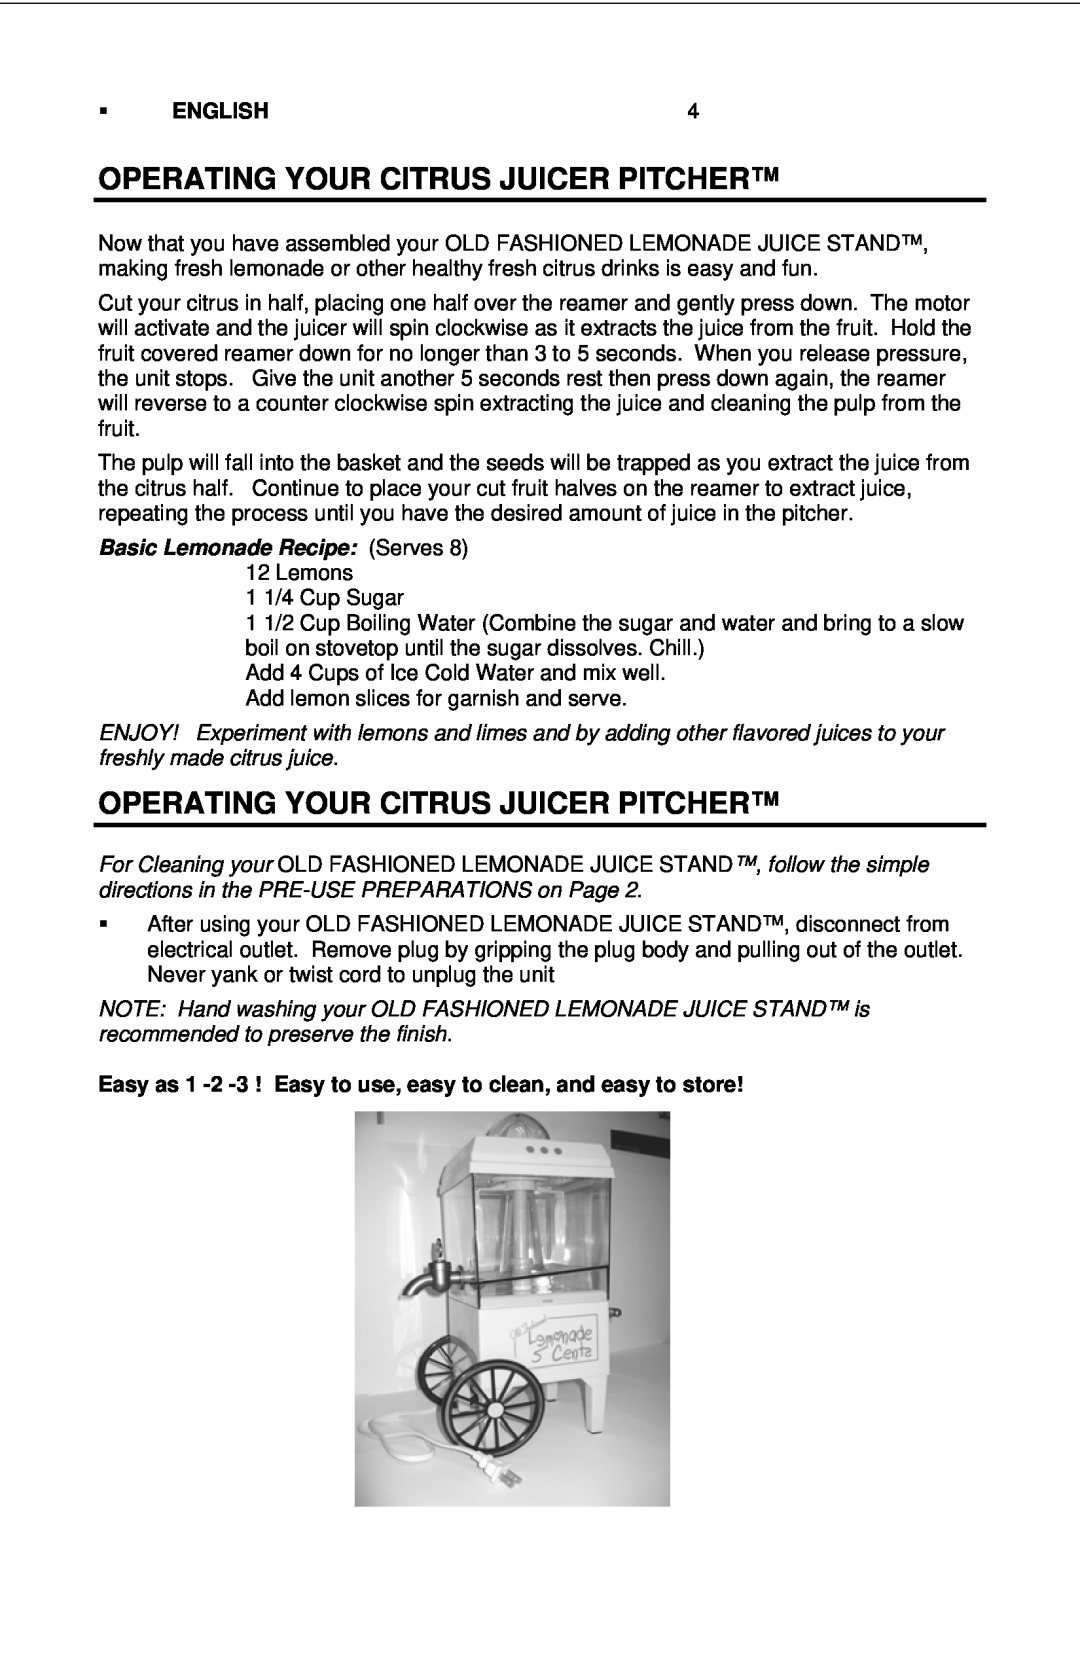 Nostalgia Electrics LJS - 502 manual Operating Your Citrus Juicer Pitcher, Basic Lemonade Recipe Serves, English 